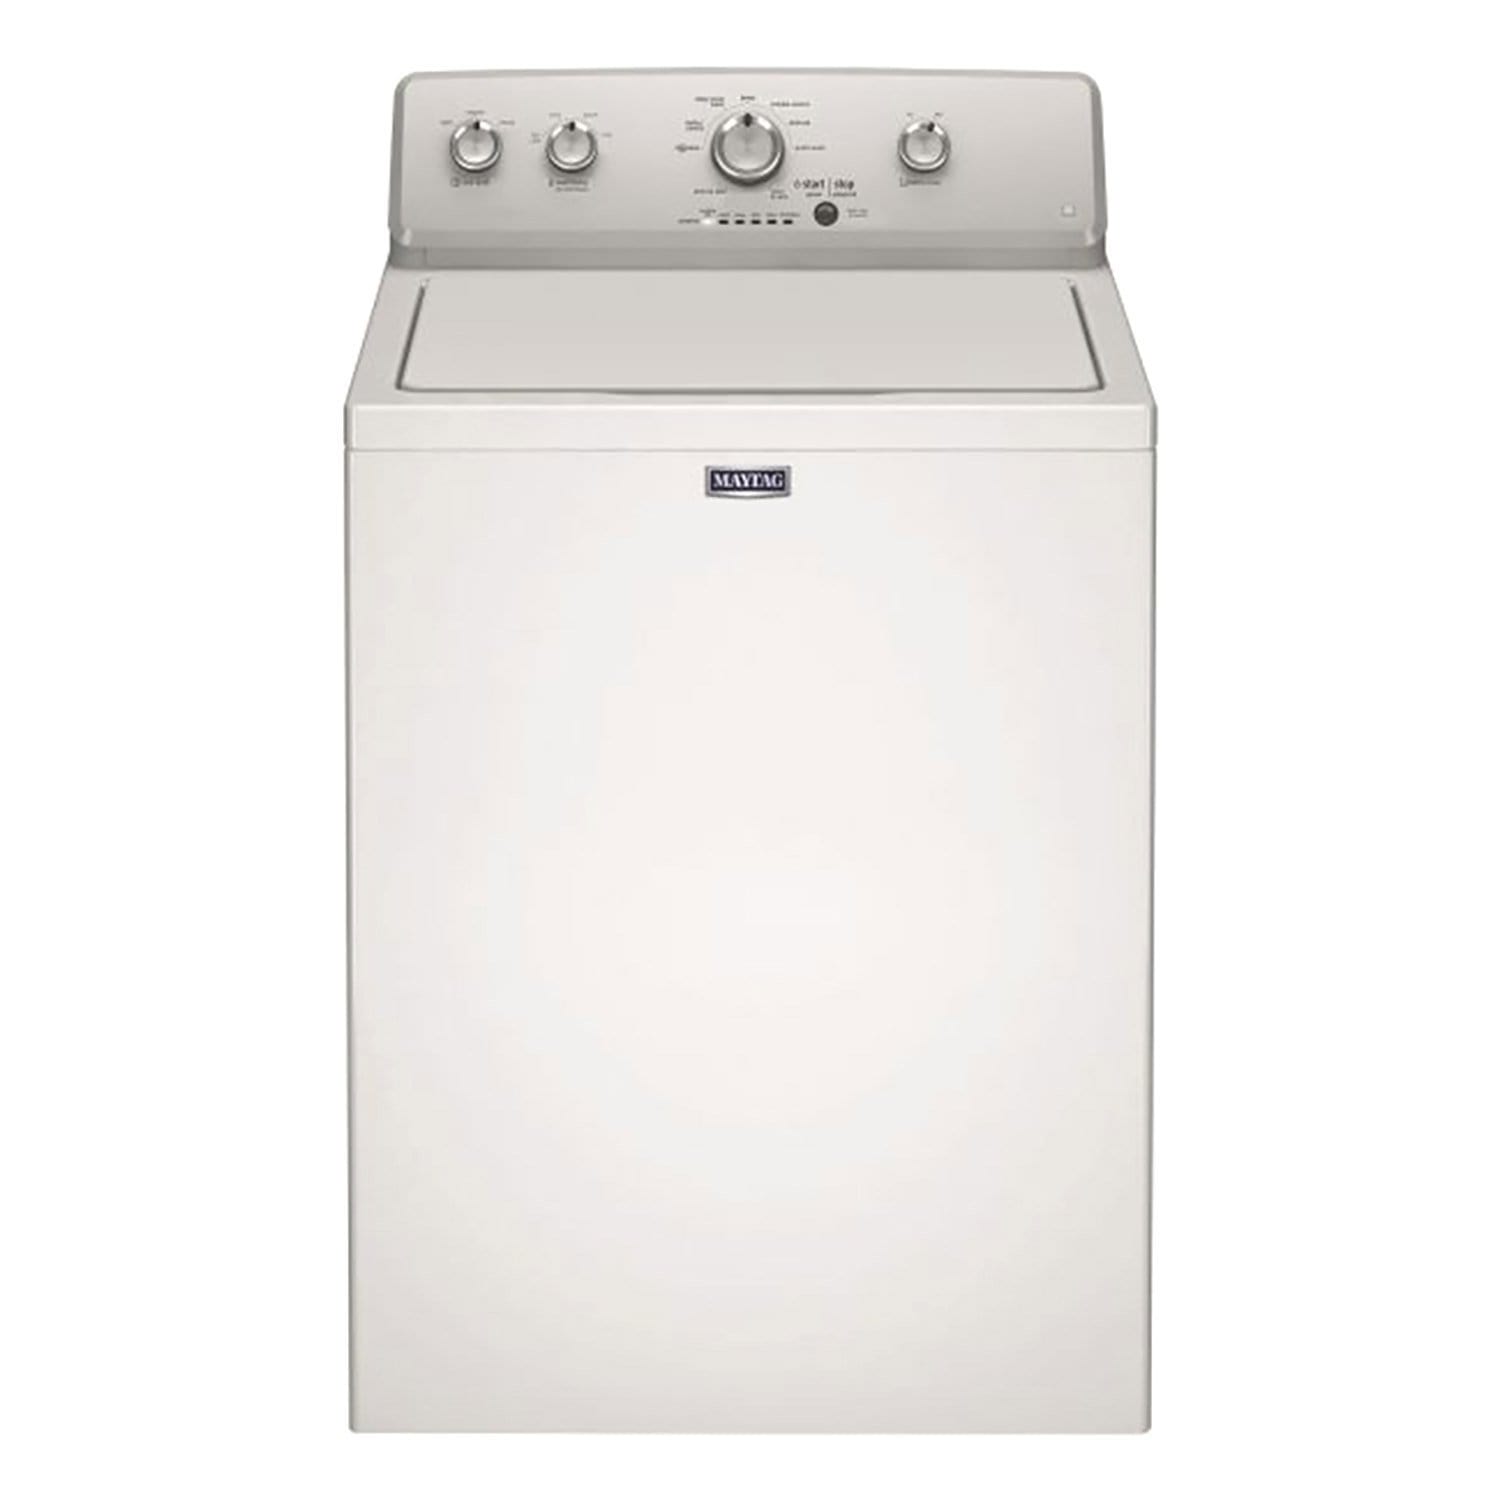 Maytag Top Loading Washing Machine - White - 3LMVWC315FW - Jashanmal Home